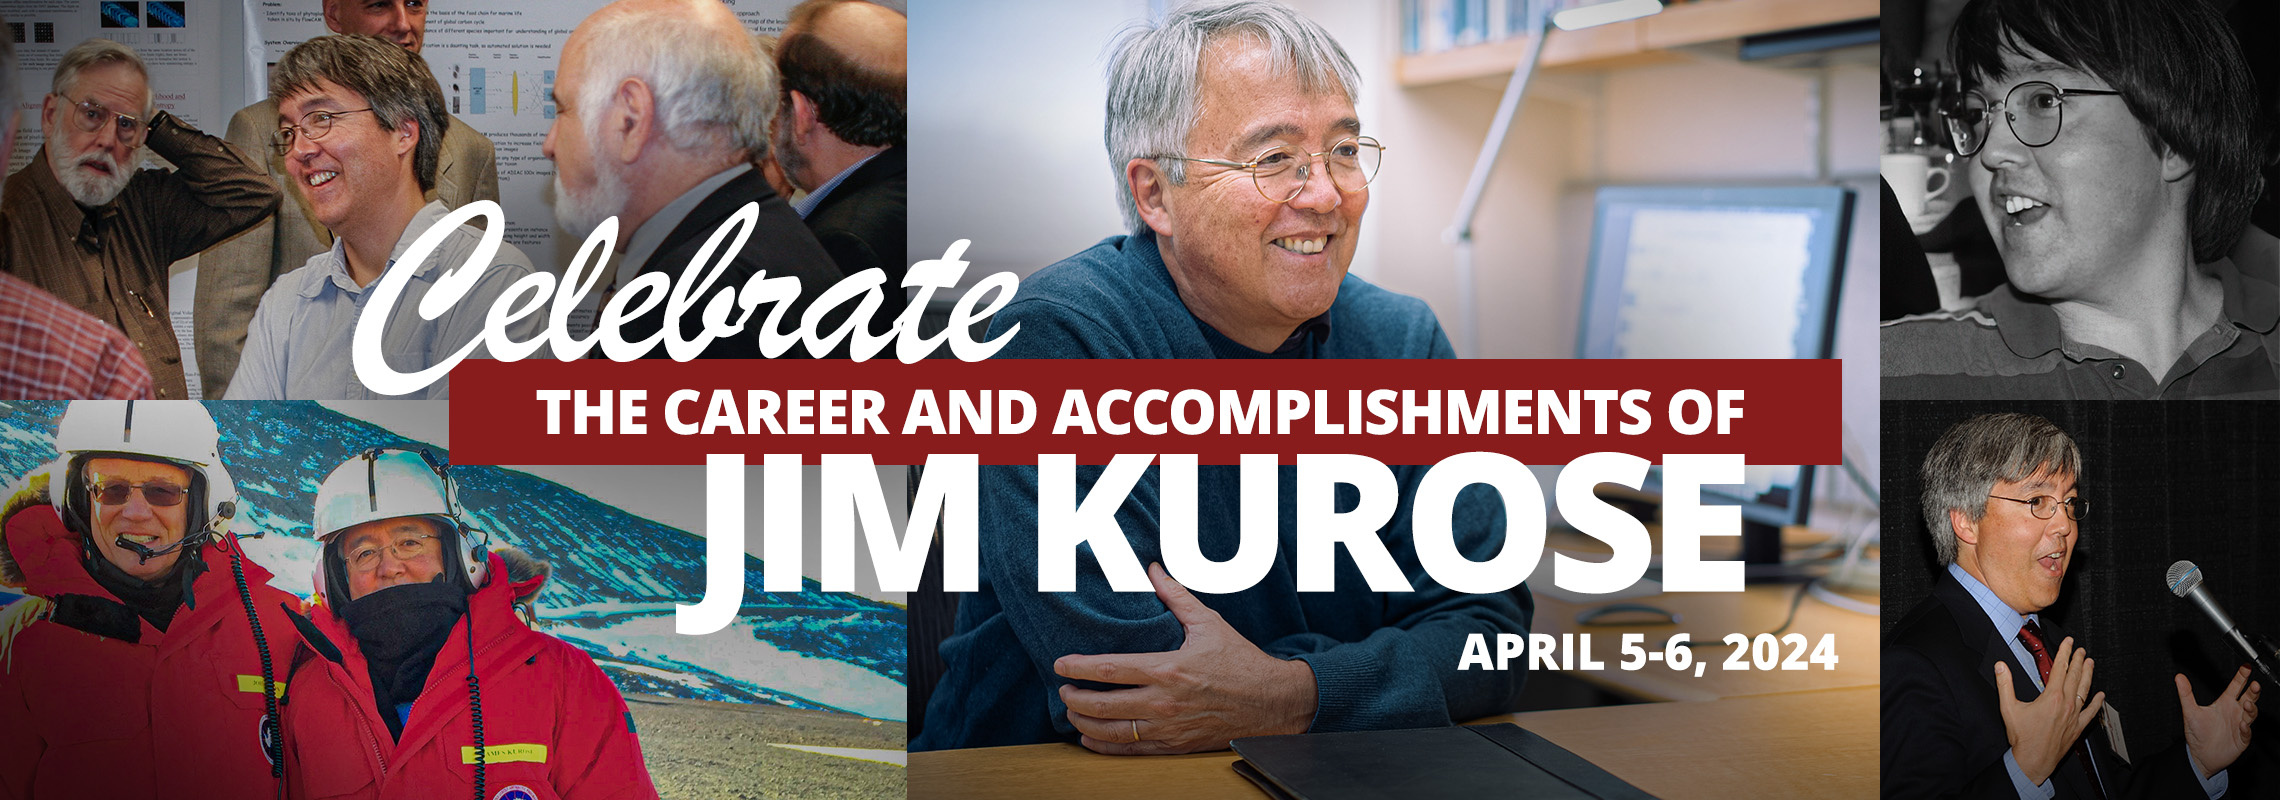 Celebrate the career and accomplishments of Jim Kurose - April 5-6, 2024 